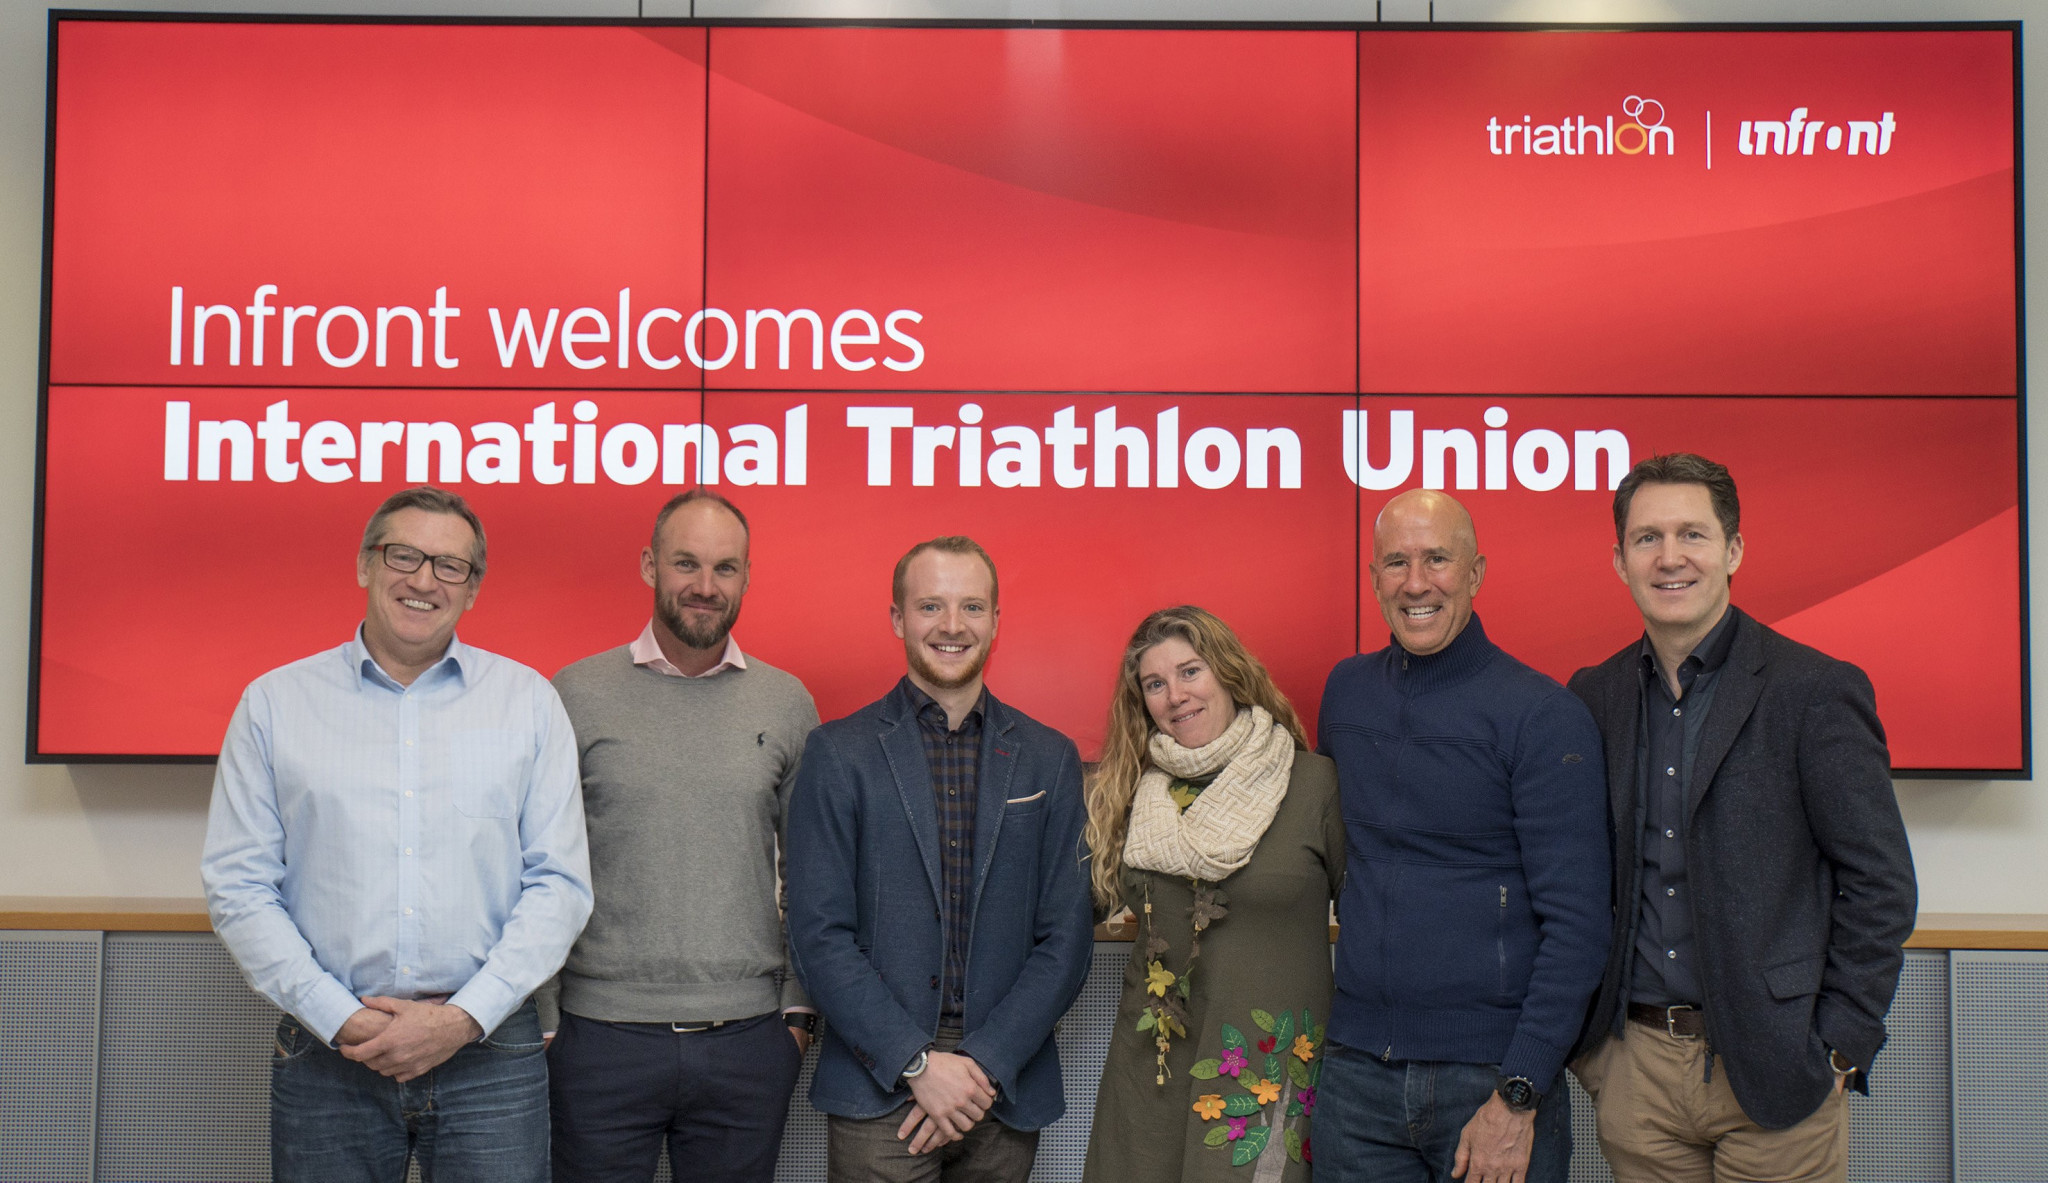 International Triathlon Union pen long-term deal with Infront